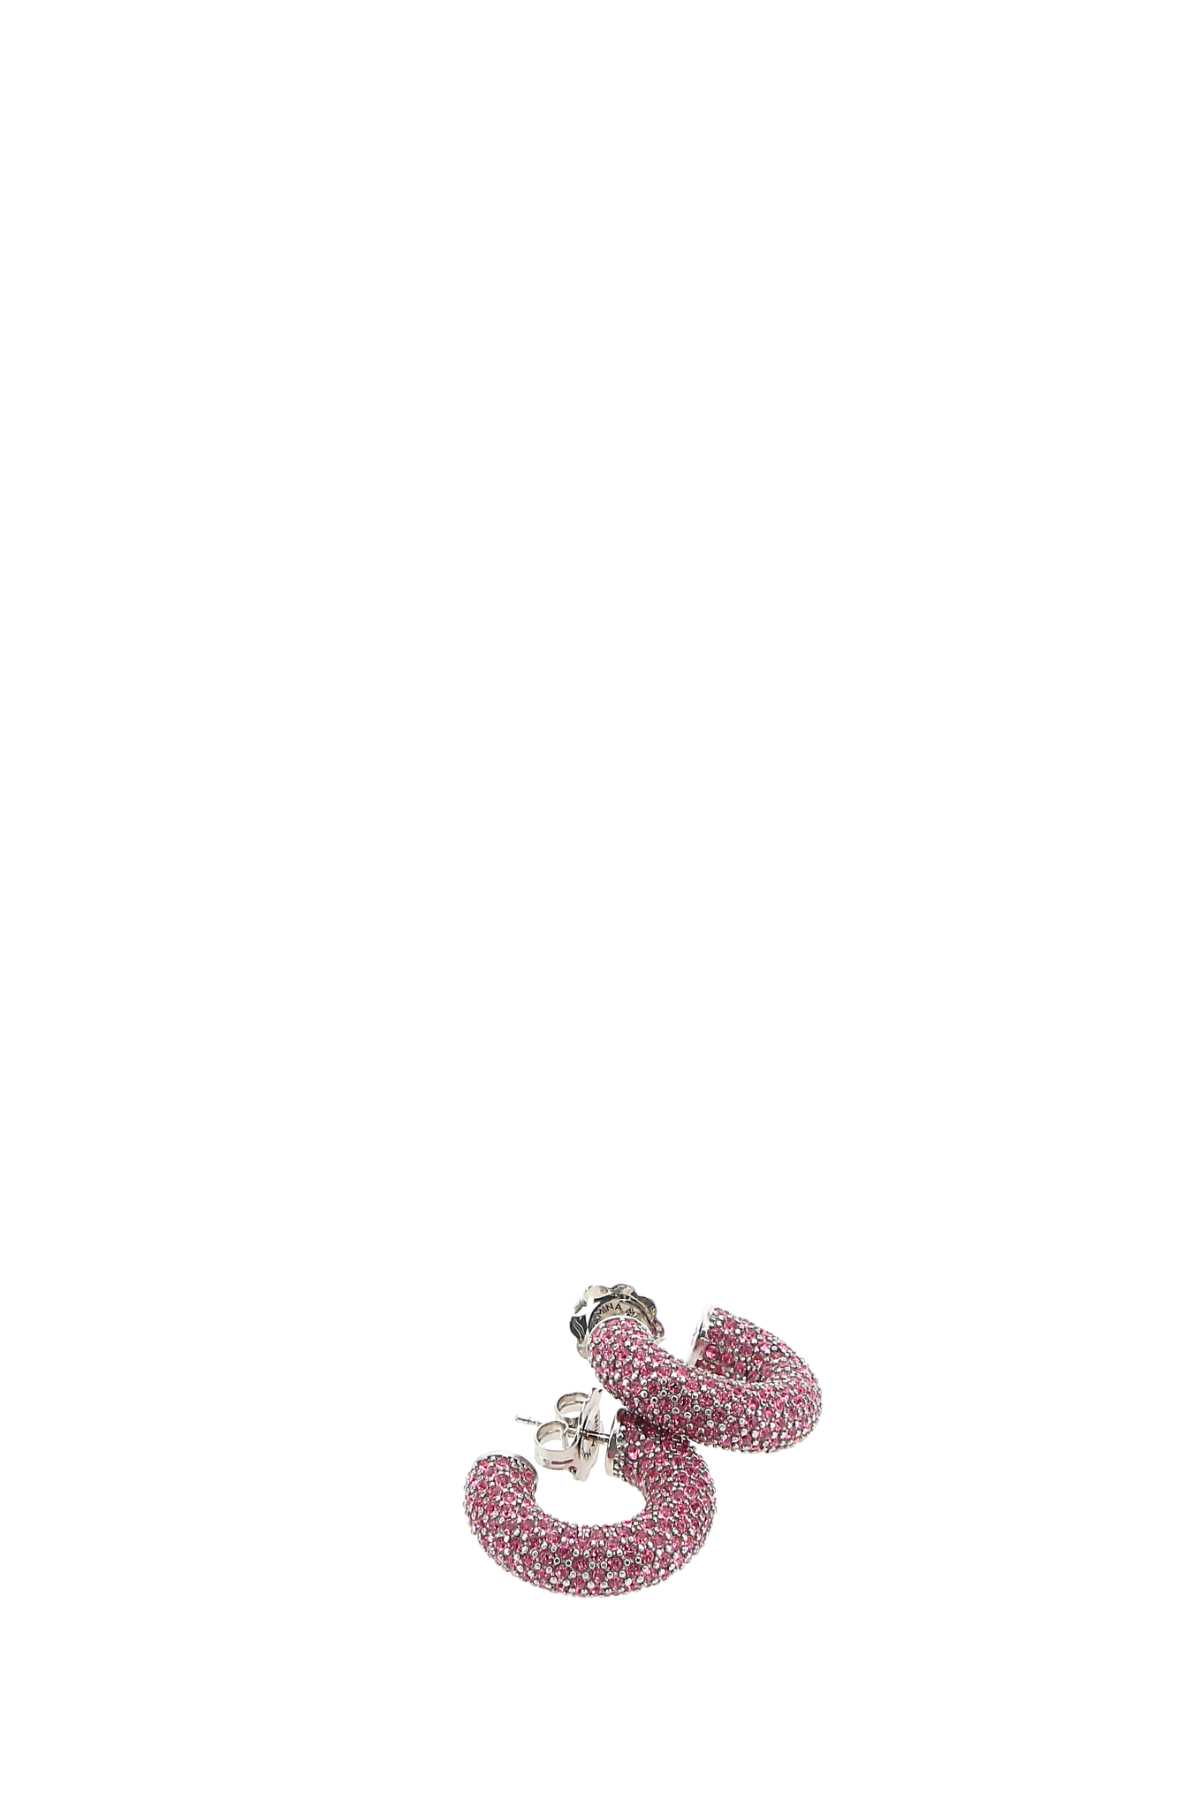 Amina Muaddi Embellished Metal Mini Cameron Earrings In Rose